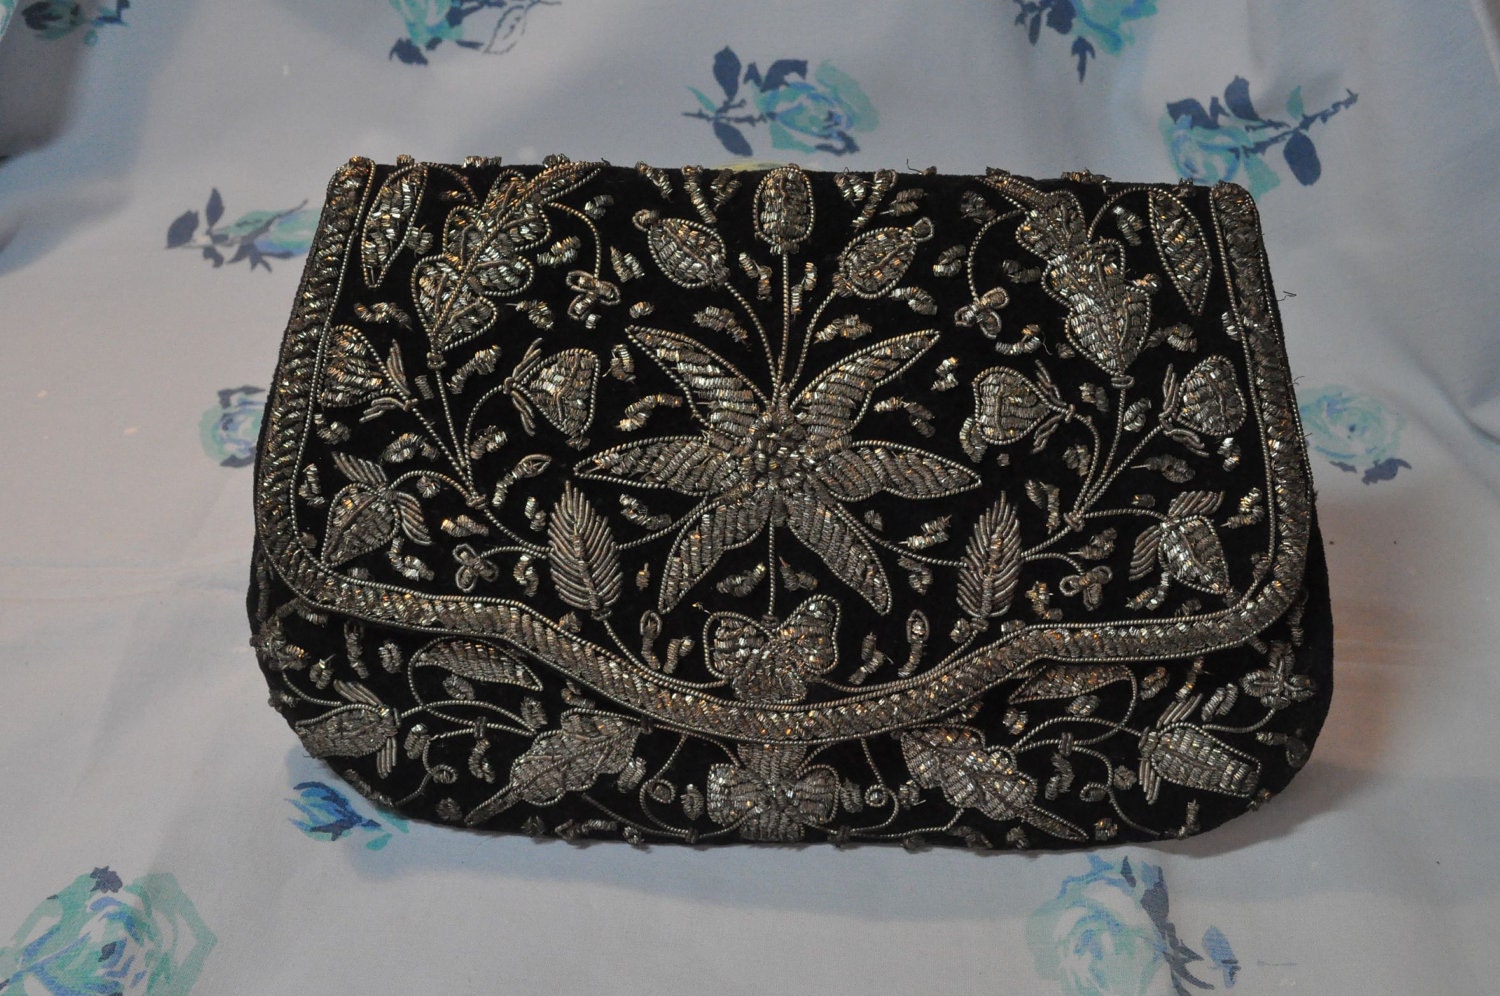 Vintage Made-In-India Zardozi Embroidered Handbag Clutch